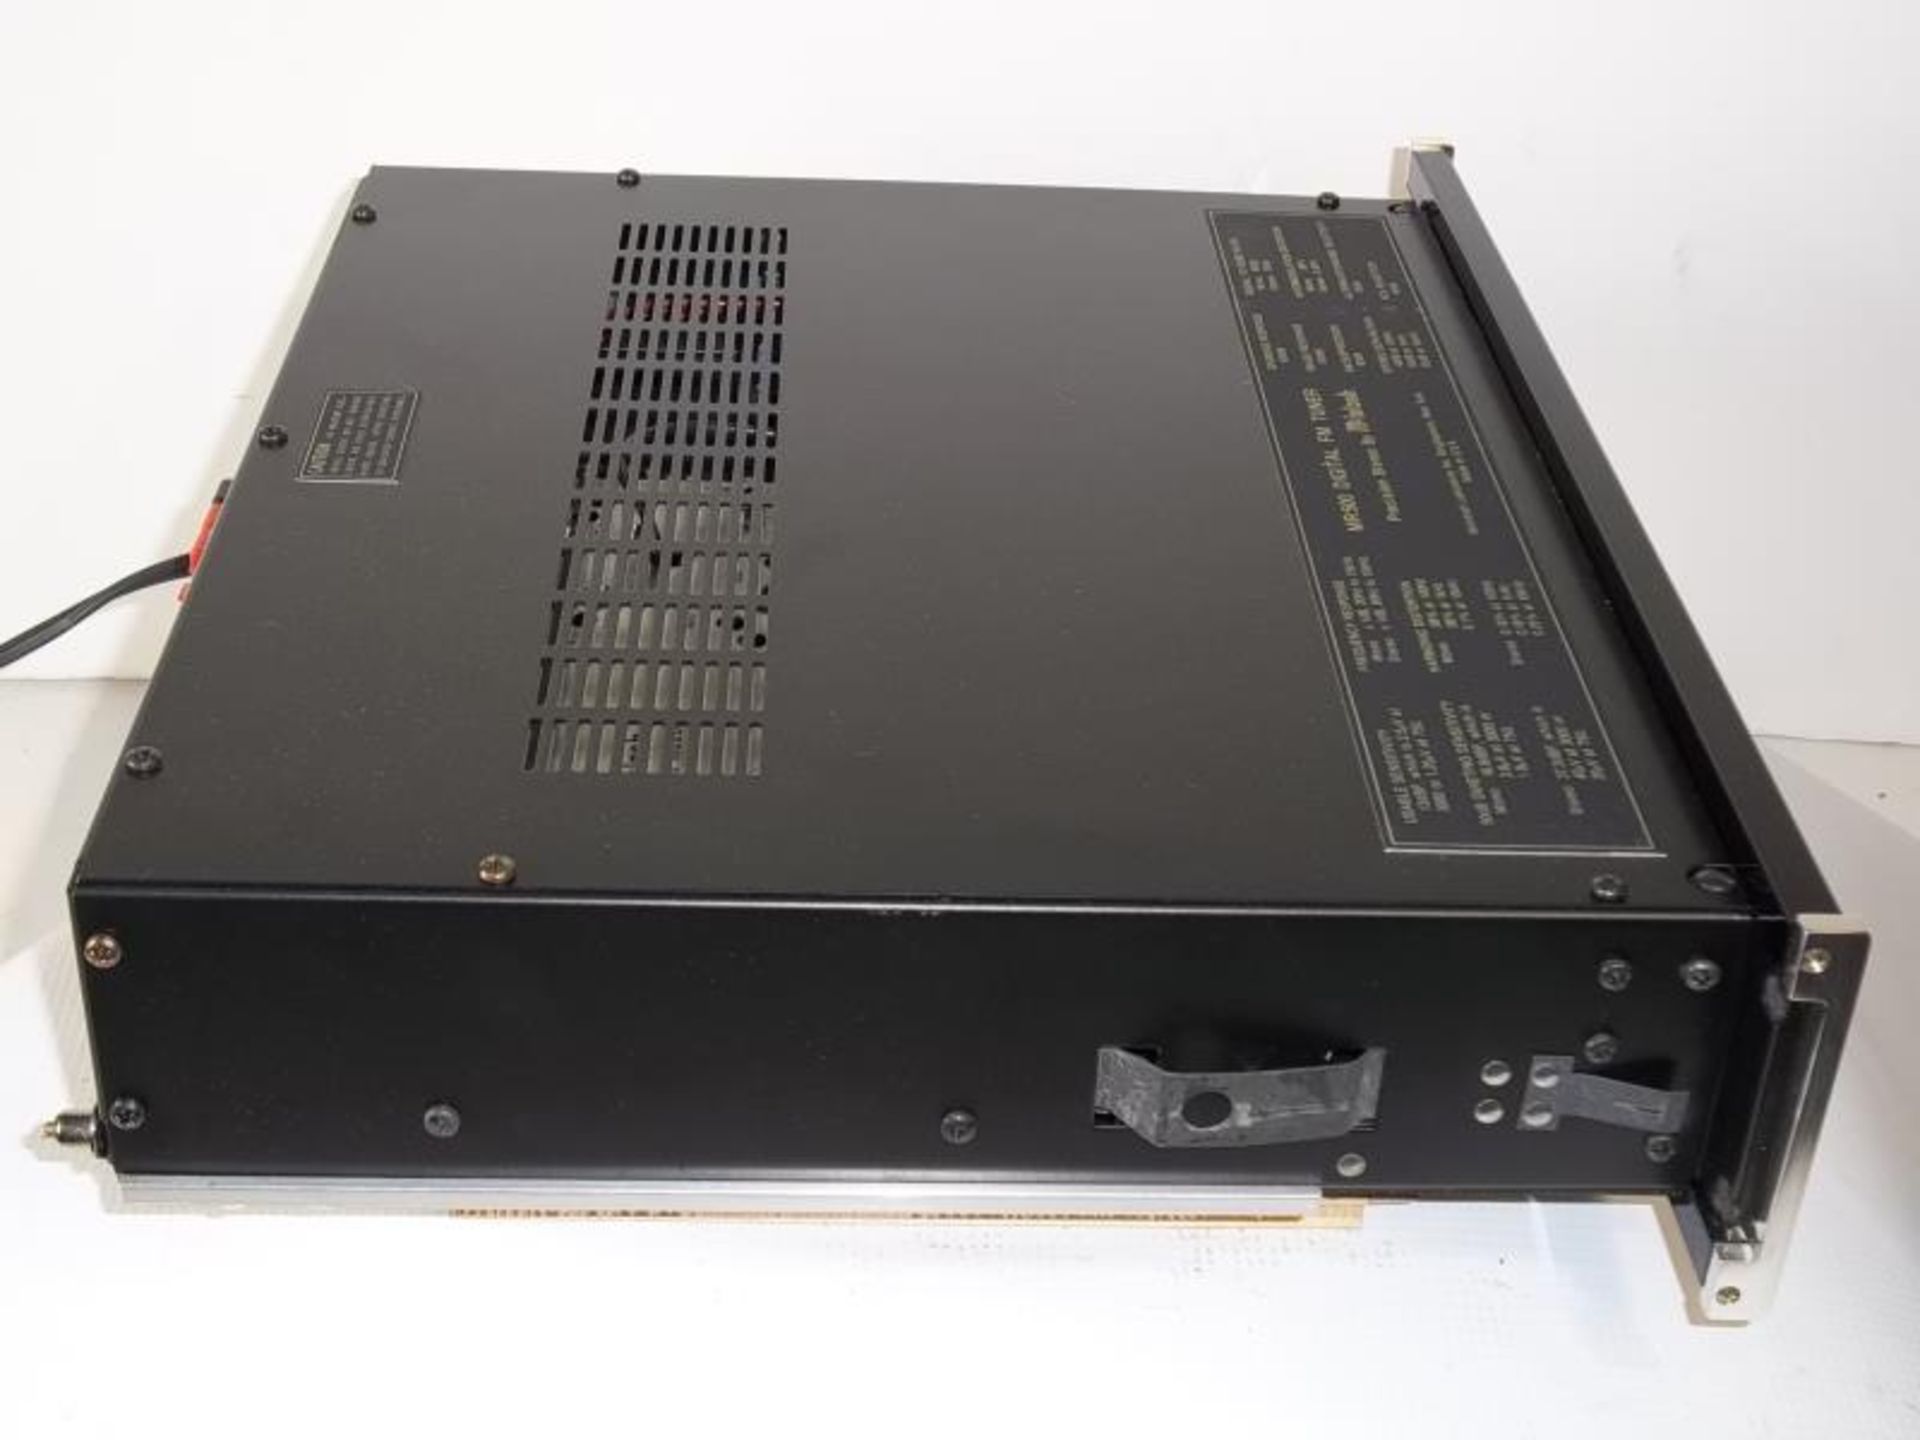 McIntosh MR-500 Digital FM Tuner, no case, in McIntosh cardboard box, s#DF1587 - tested - powers up - Image 9 of 9